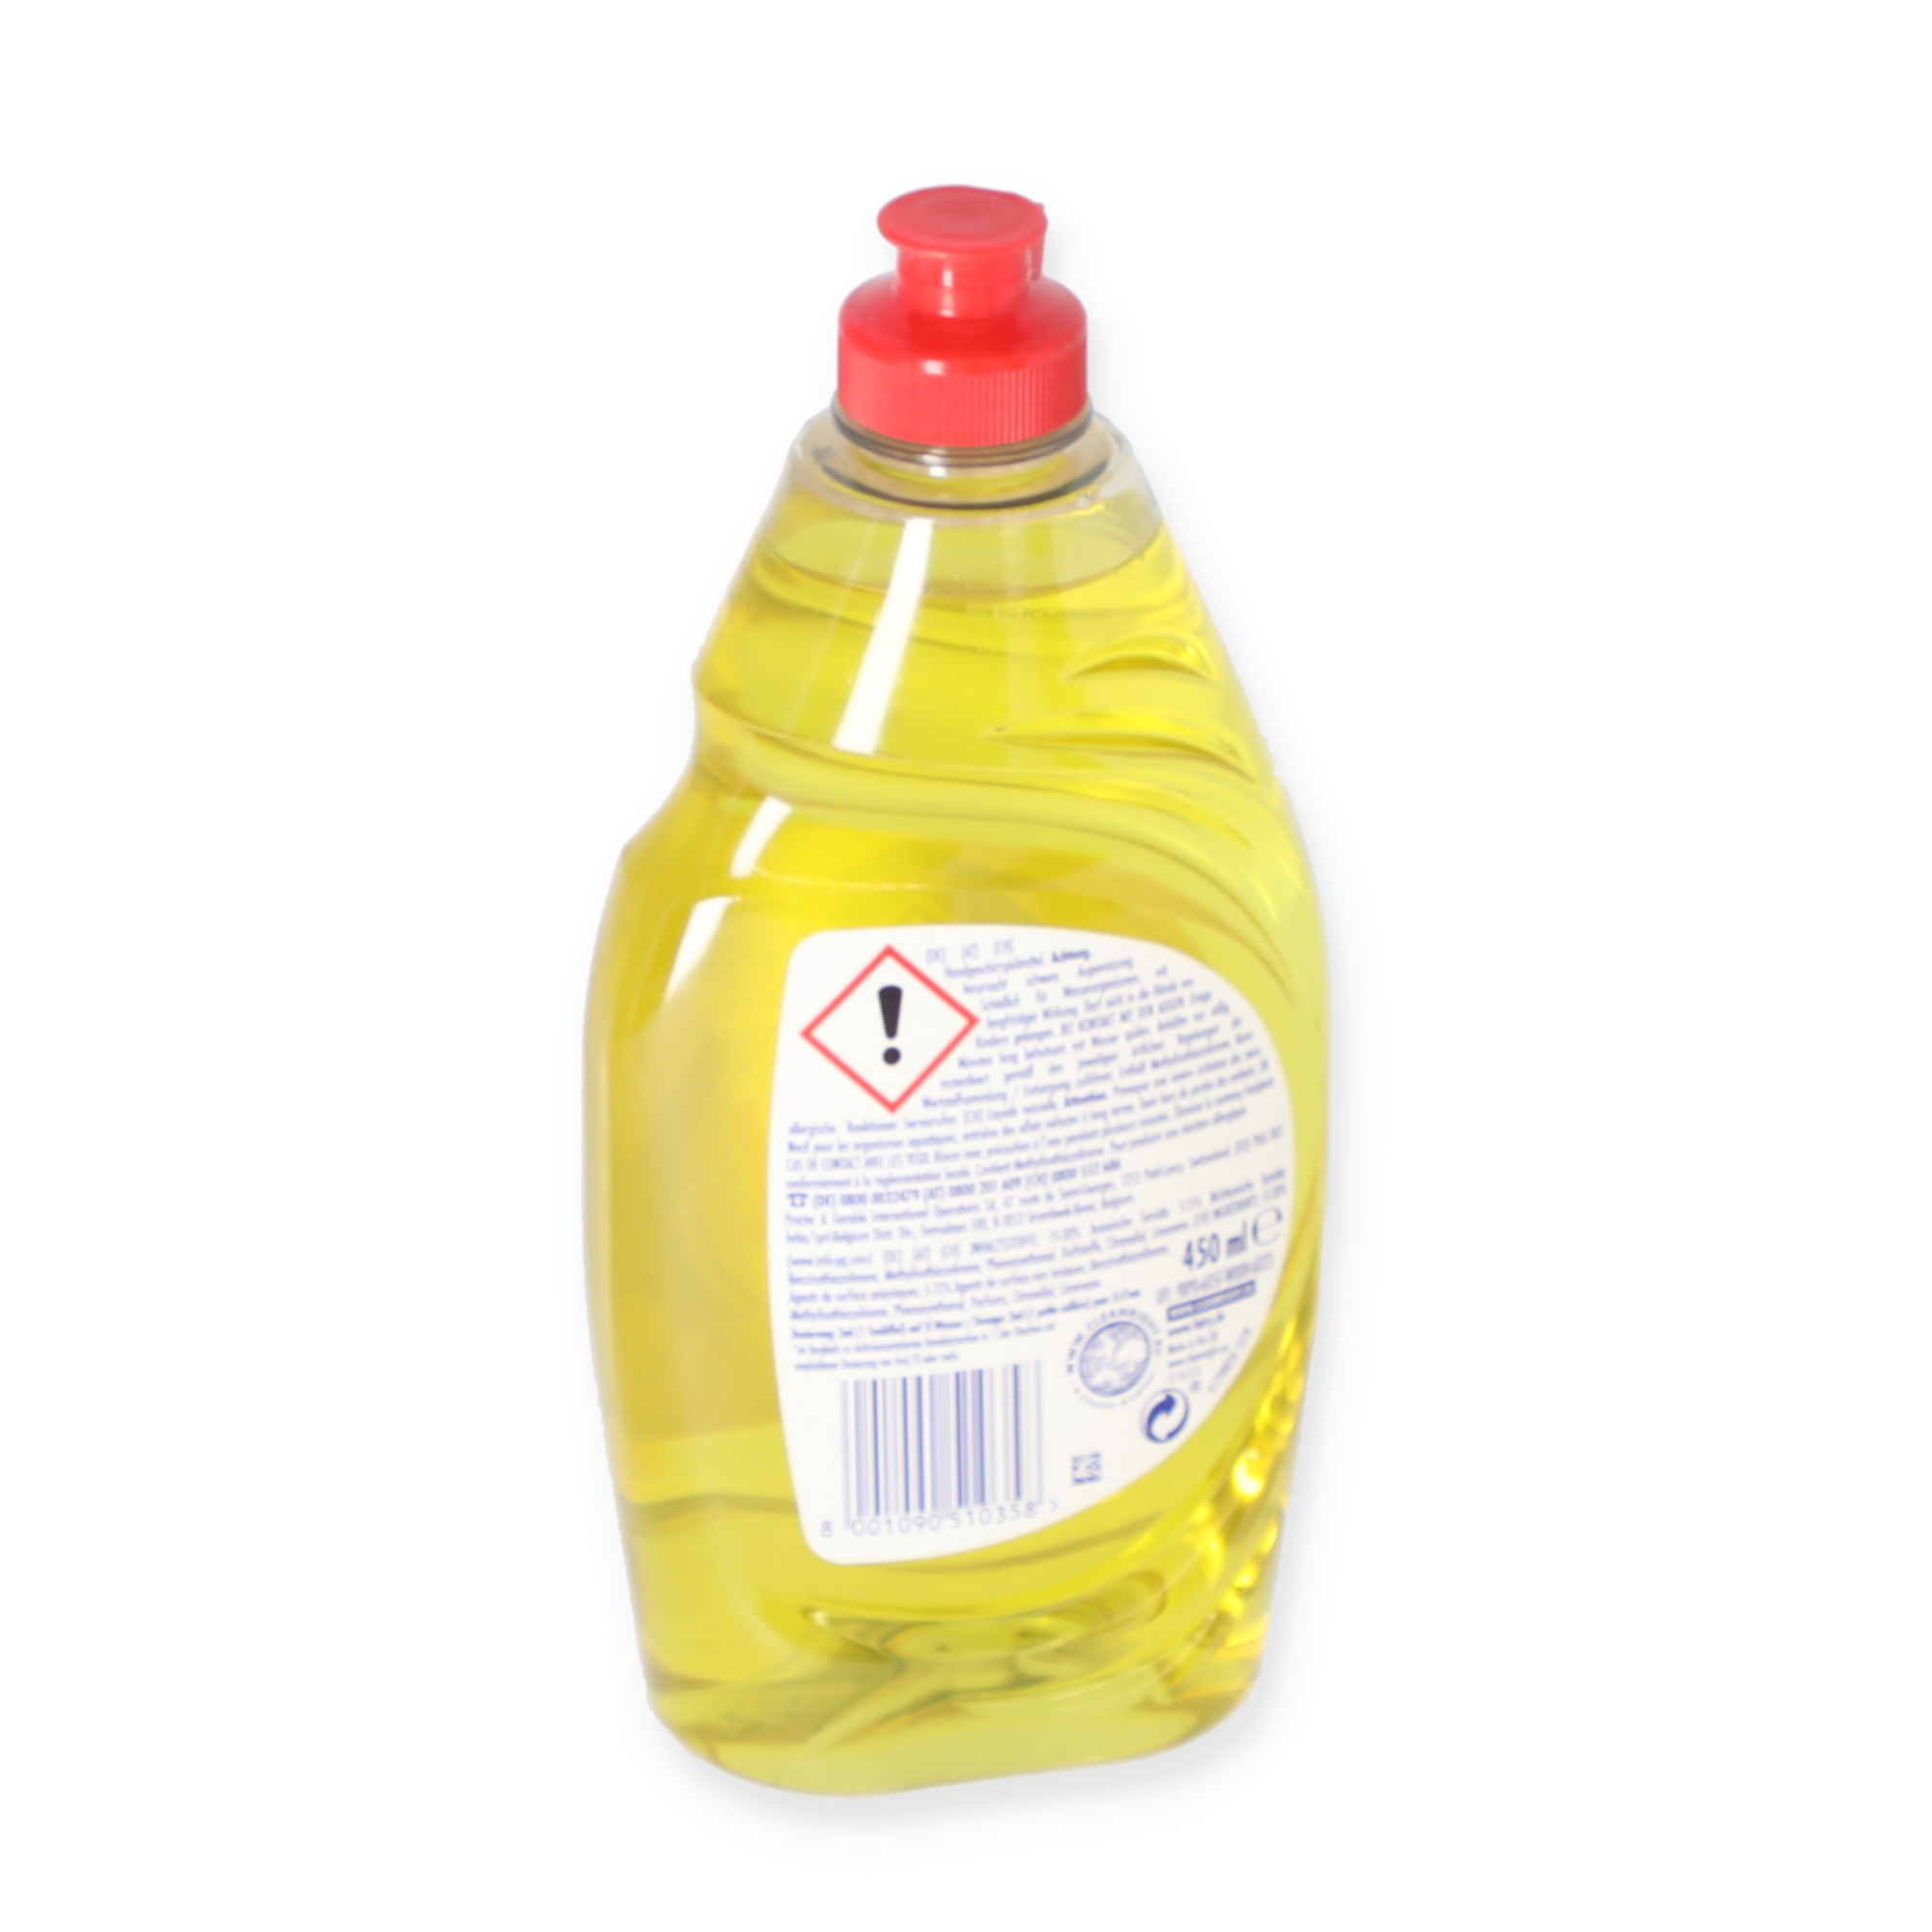 Spülmittel 'Ultra Konzentrat' Zitrone 450 ml + product picture